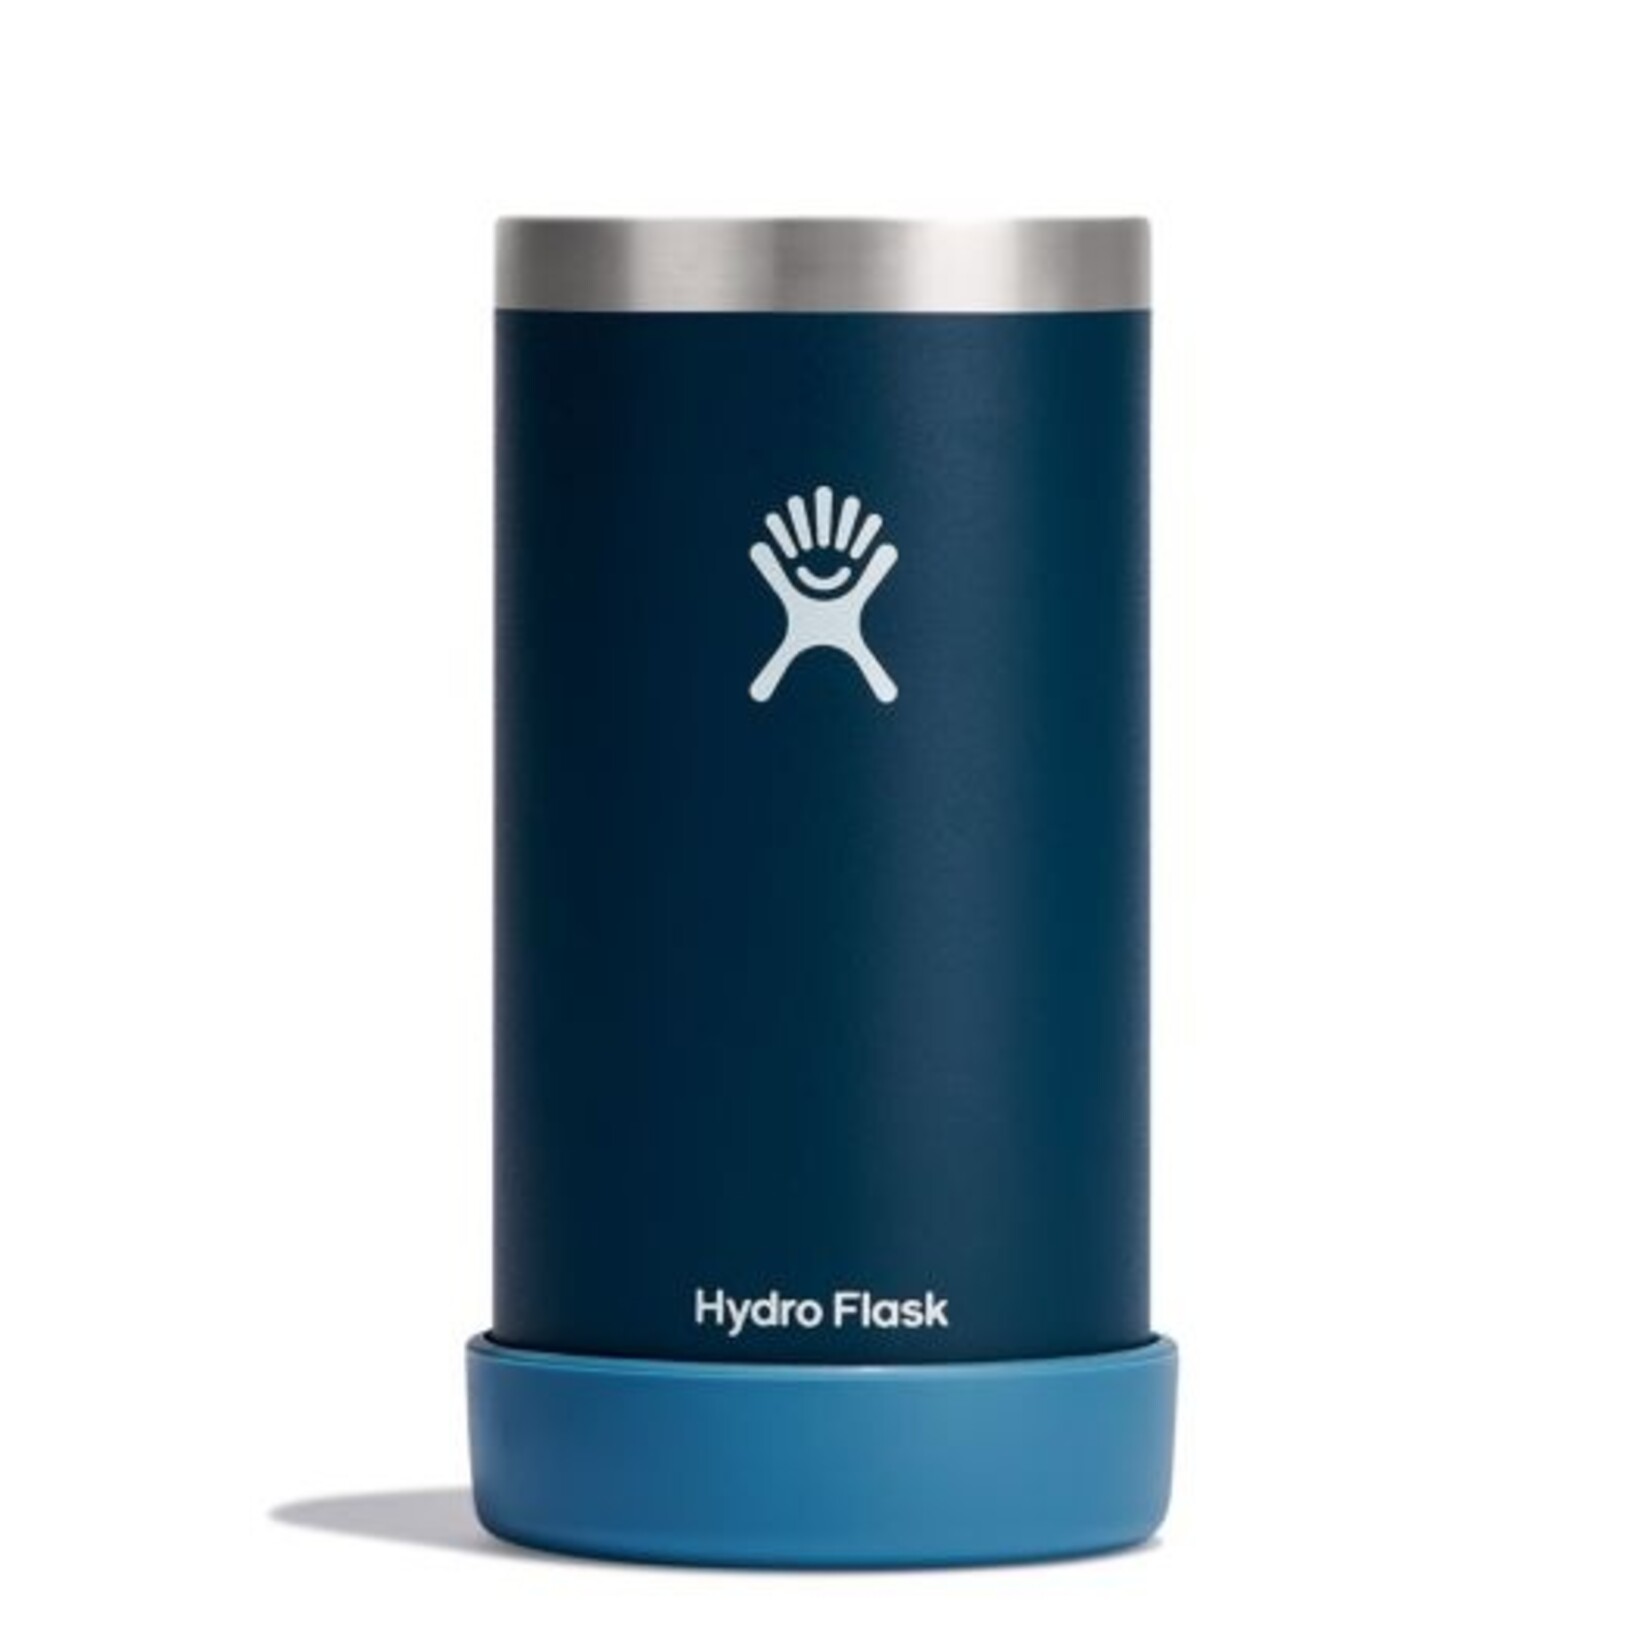 Hydro Flask 16oz Tallboy cooler cup